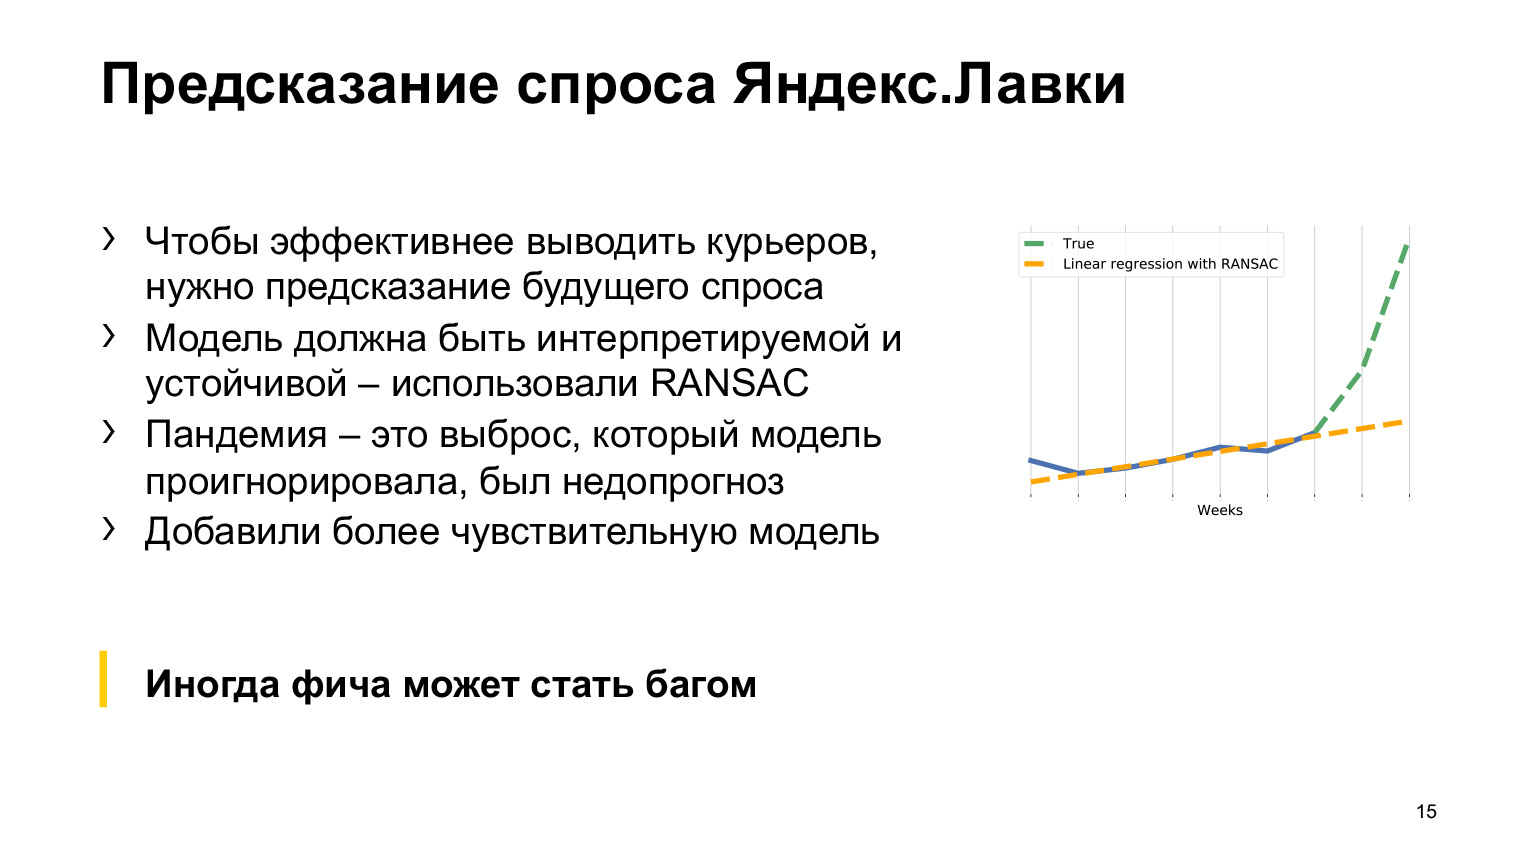 Как коронавирус повлиял на ML-проекты Такси, Еды и Лавки. Доклад Яндекса - 7